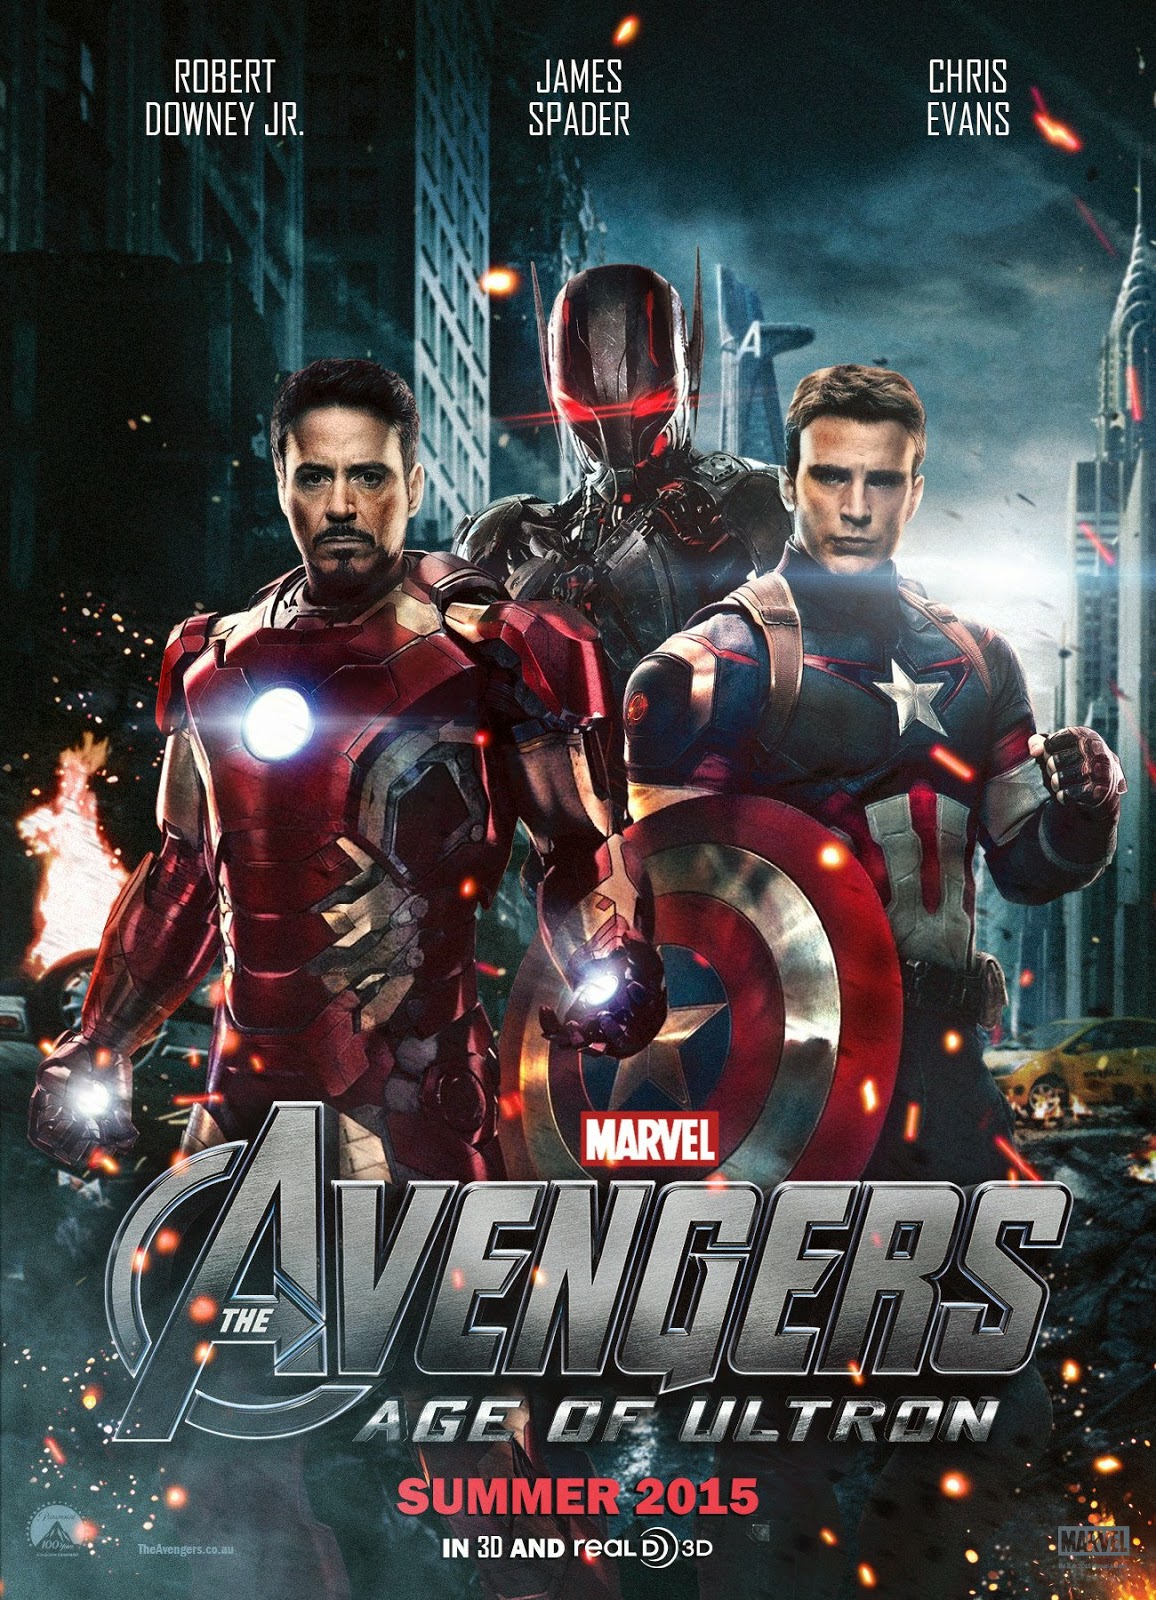 El Rincón de Snake: Trailers: Avengers La Era de Ultron (2015)